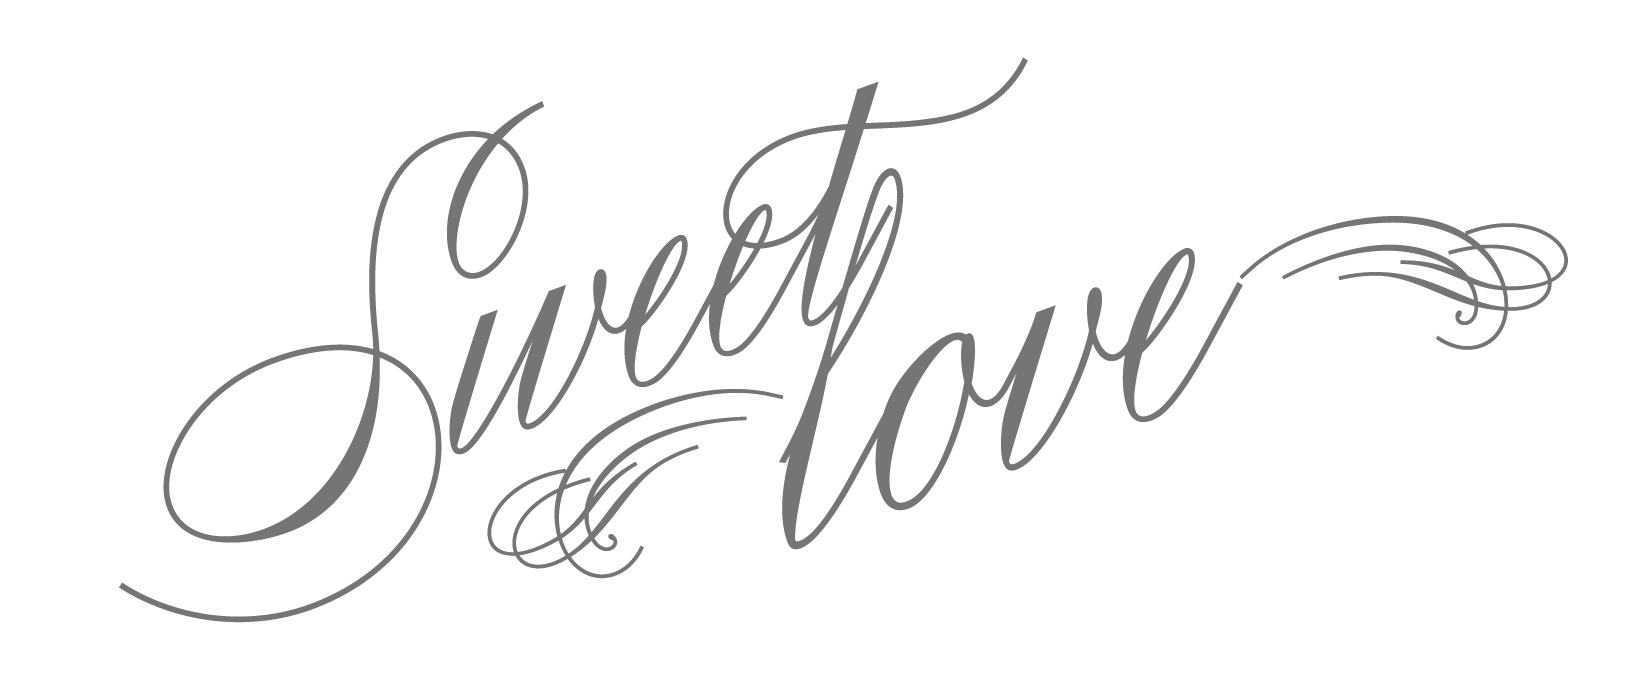 Free Calligraphy Wedding Fonts